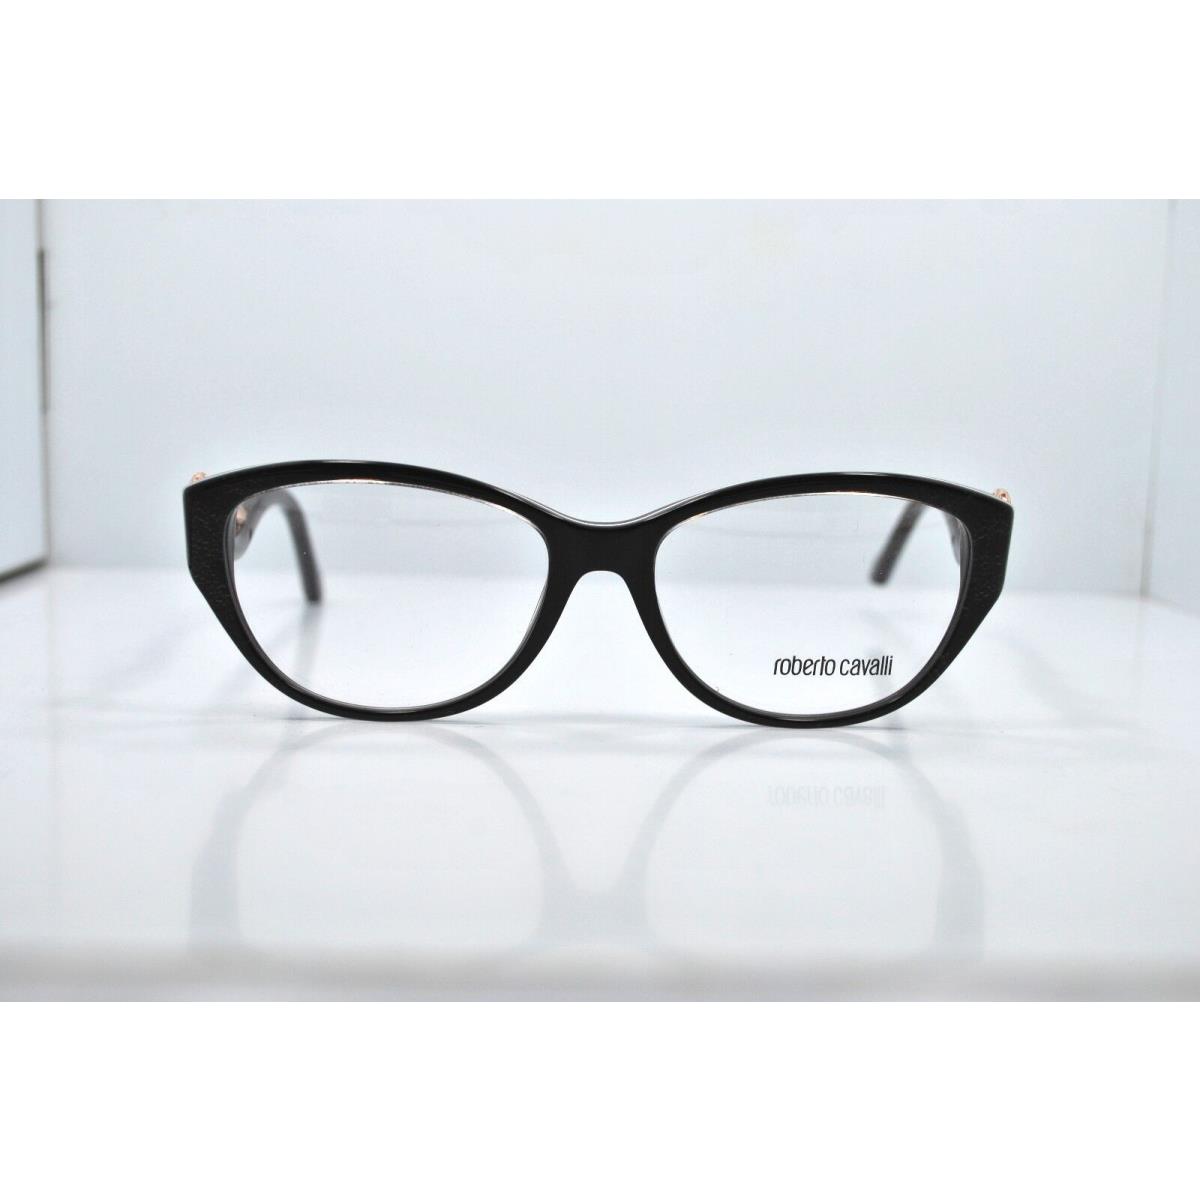 Roberto Cavalli eyeglasses PRIJIPATI - Brown Frame 0